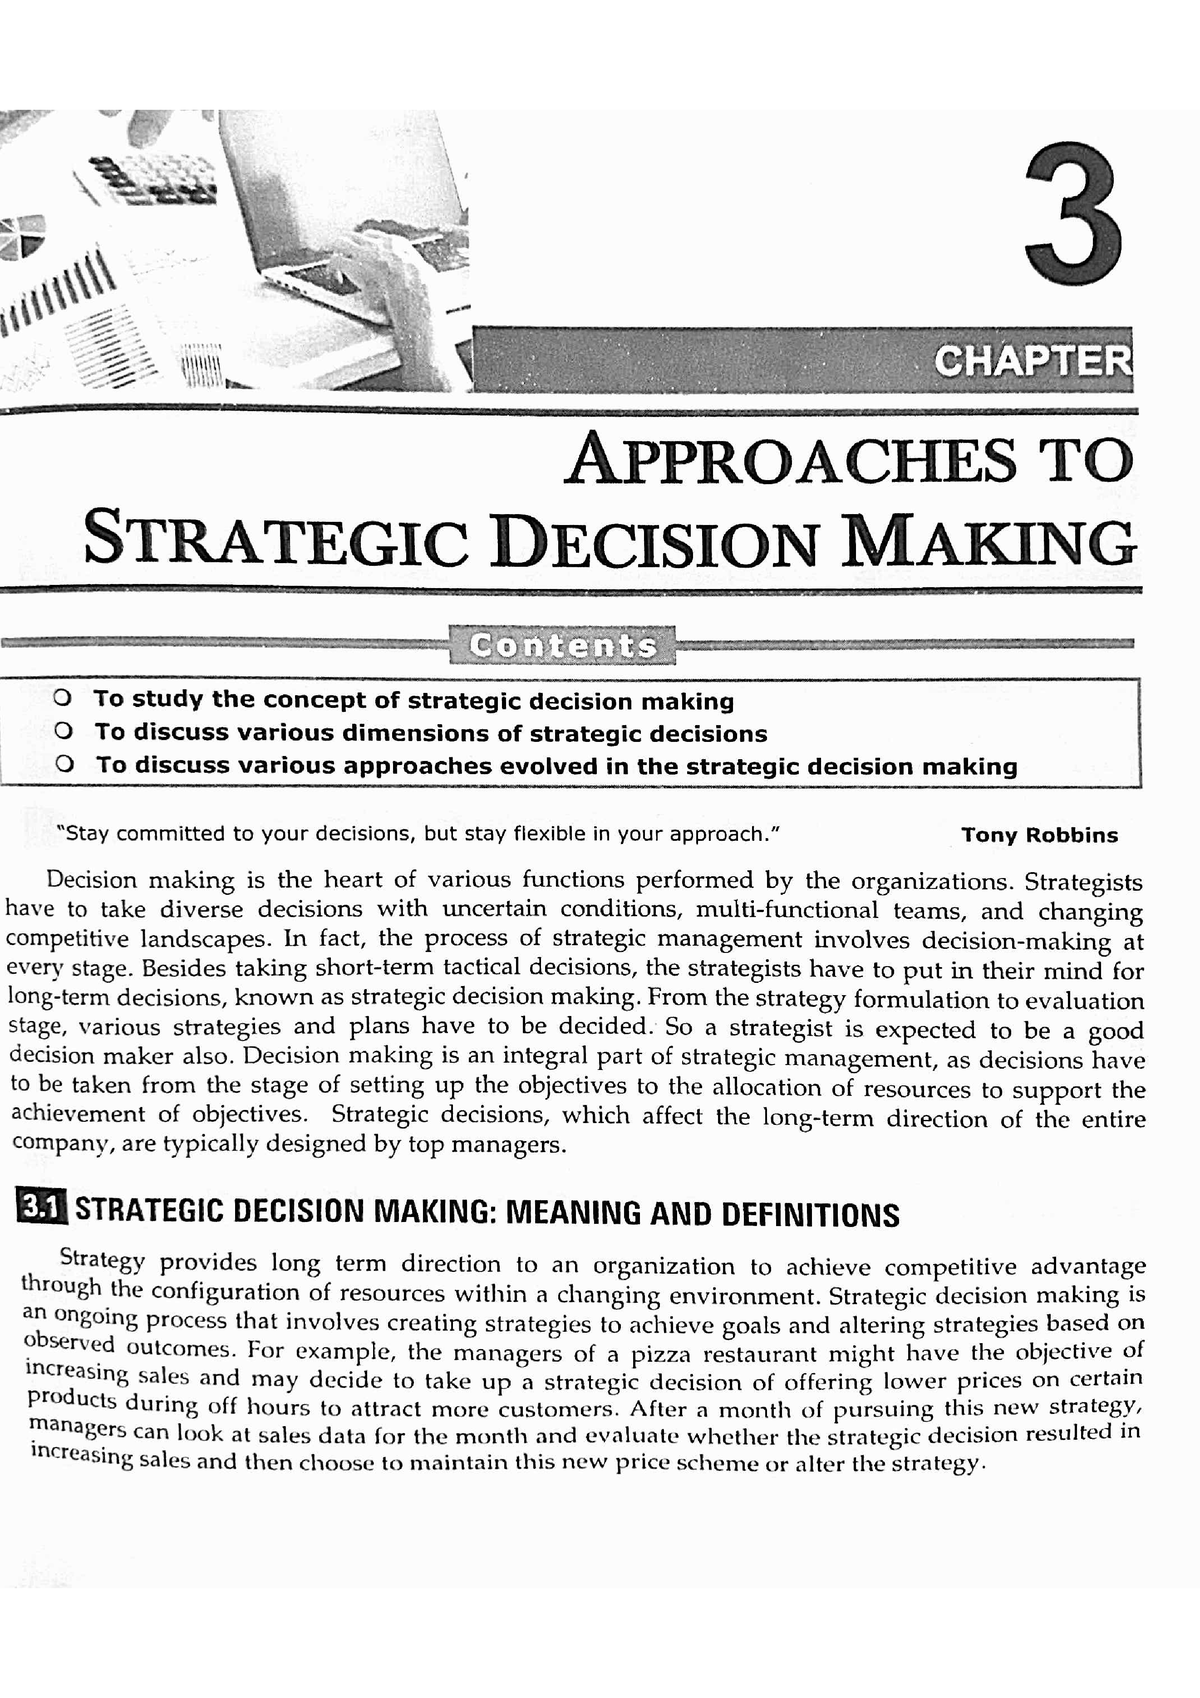 thesis strategic decision making